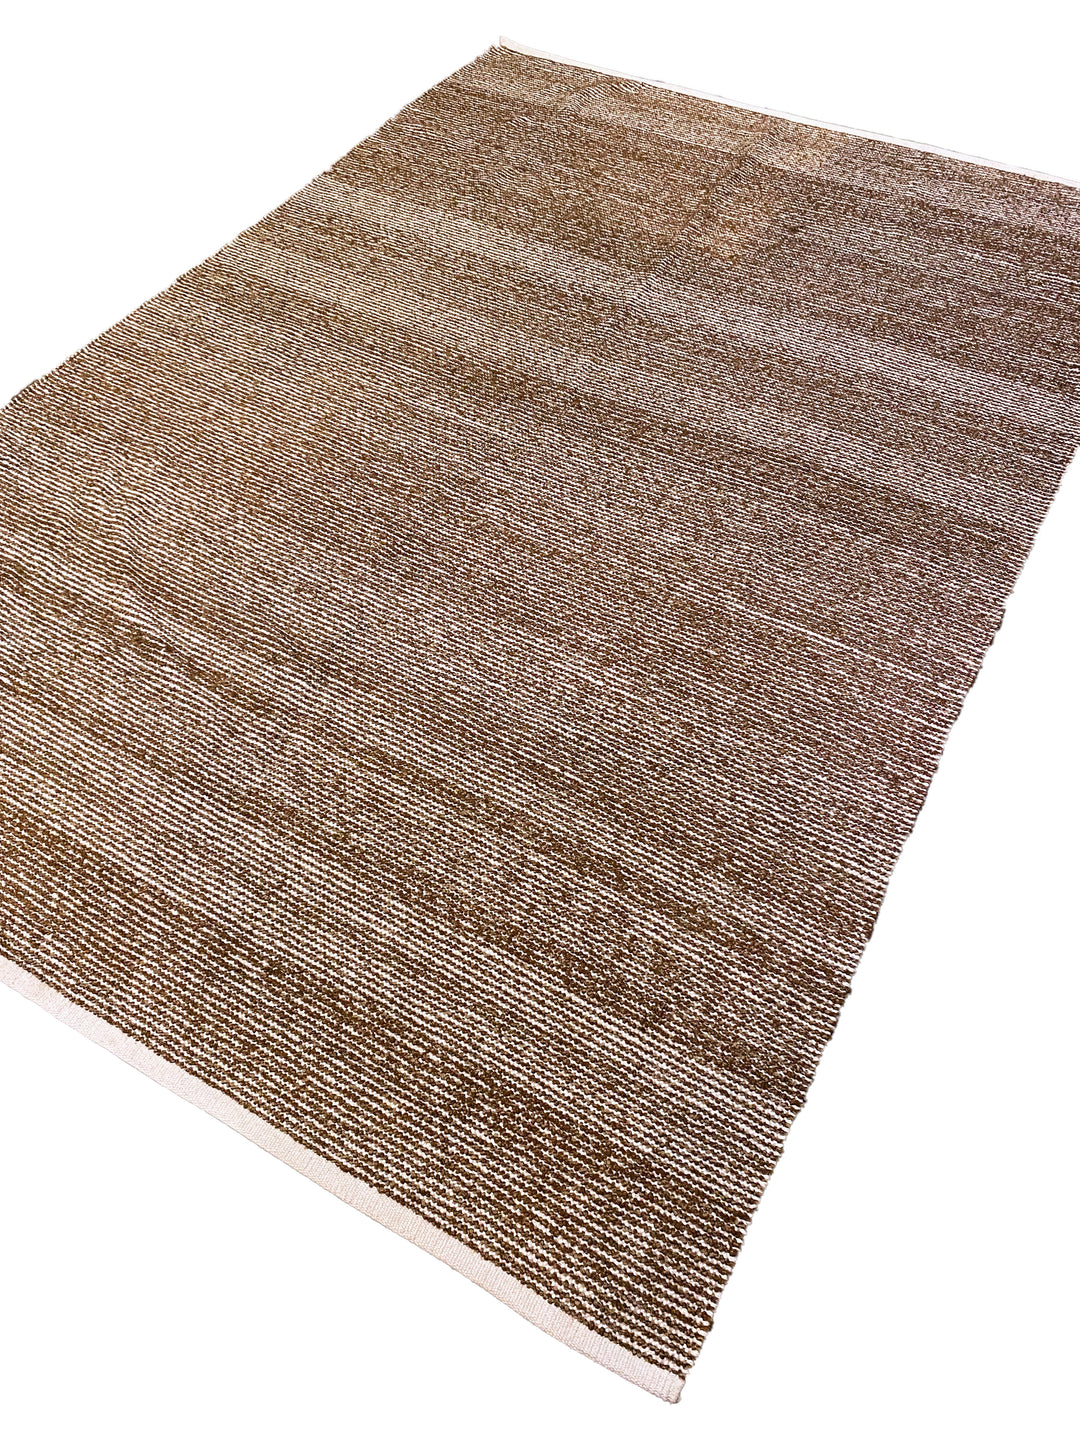 Cierto - Size: 7.7 x 5.3 - Imam Carpet Co